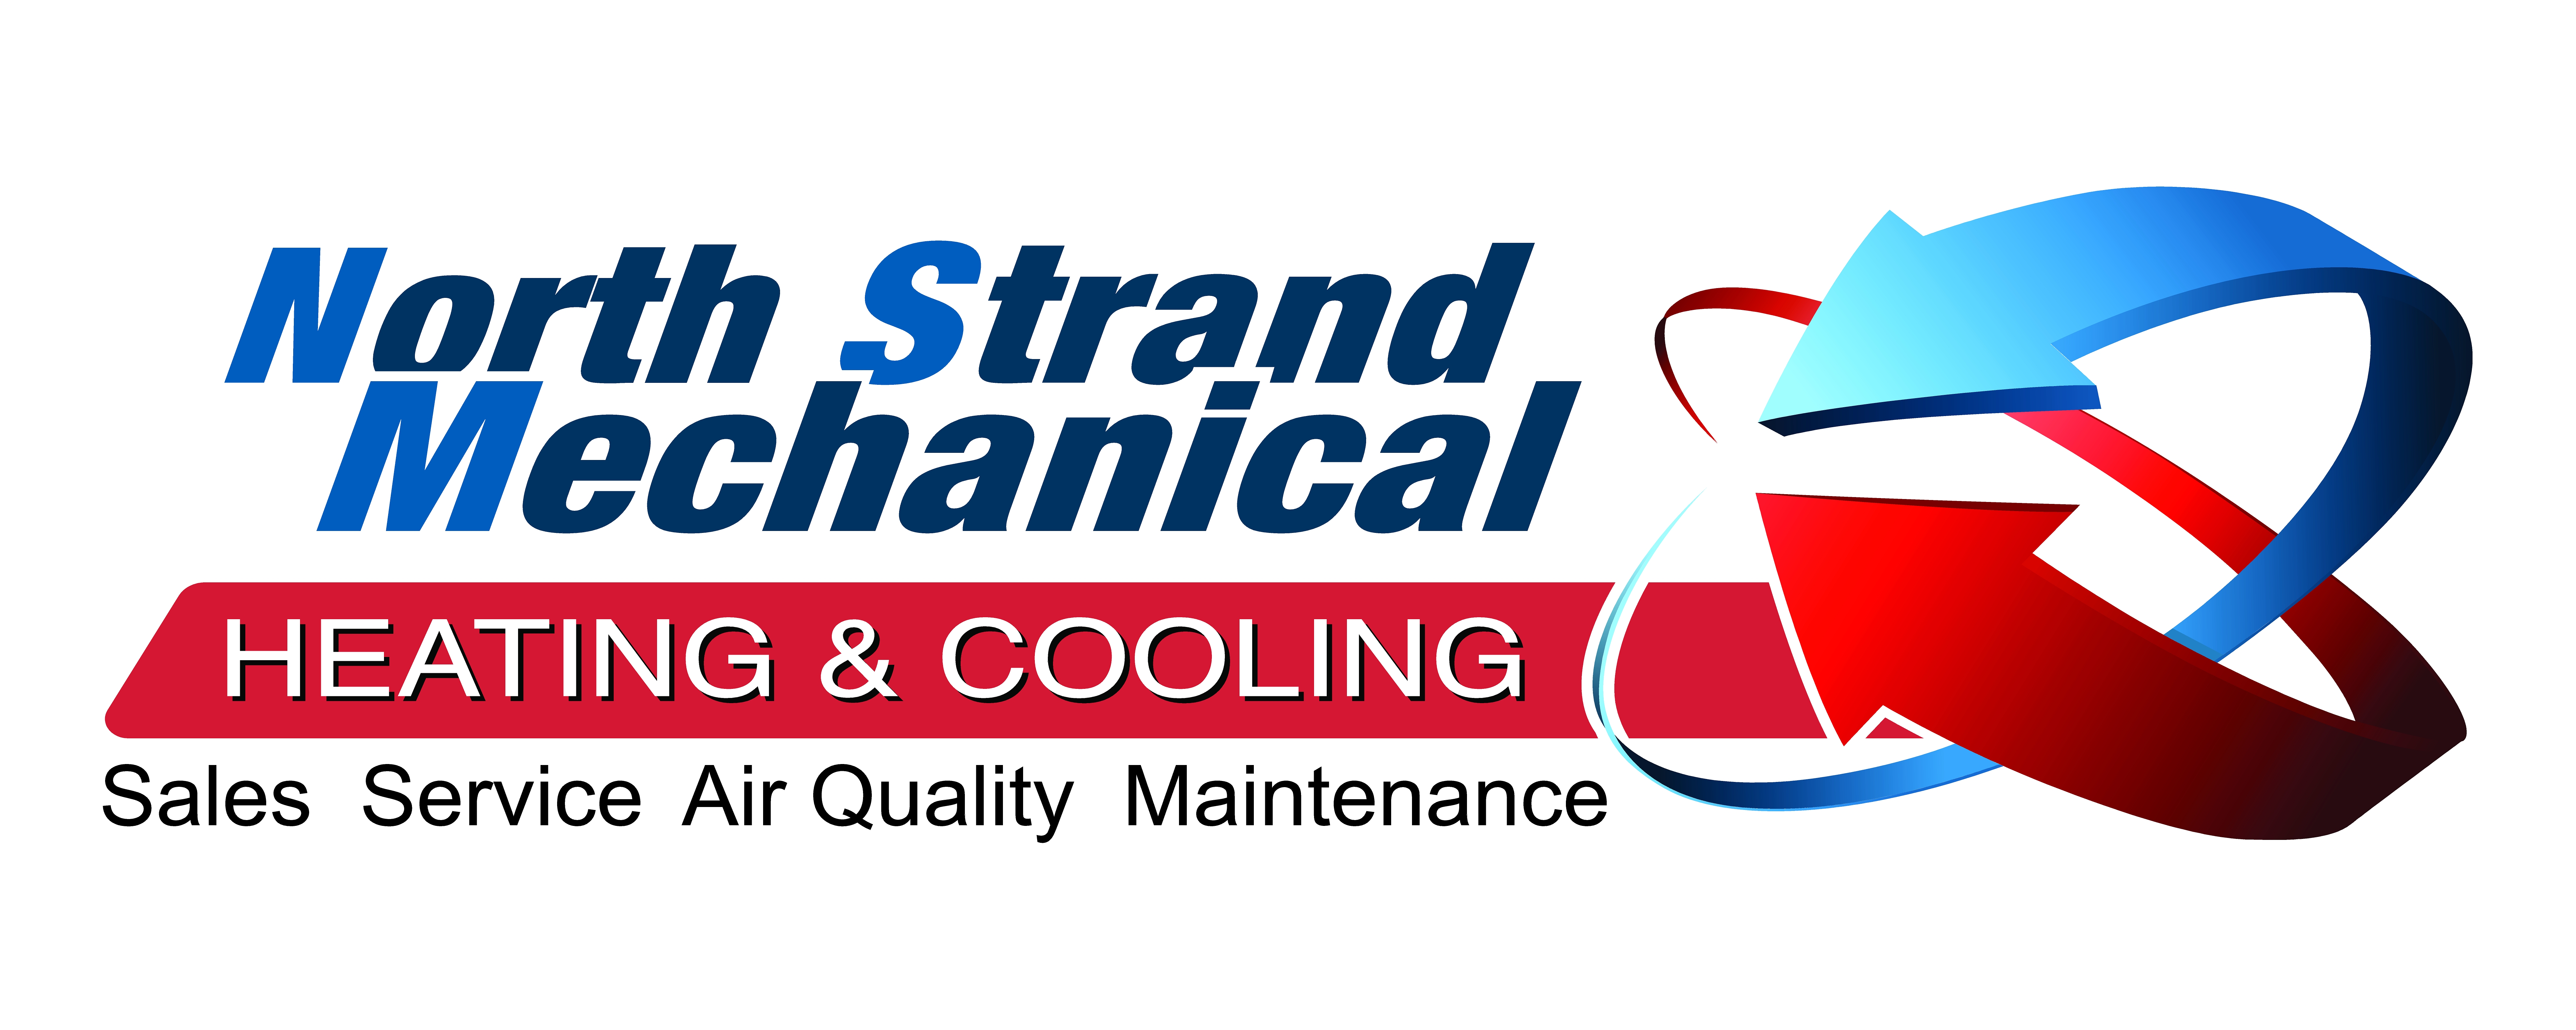 North Strand Mechanical logo